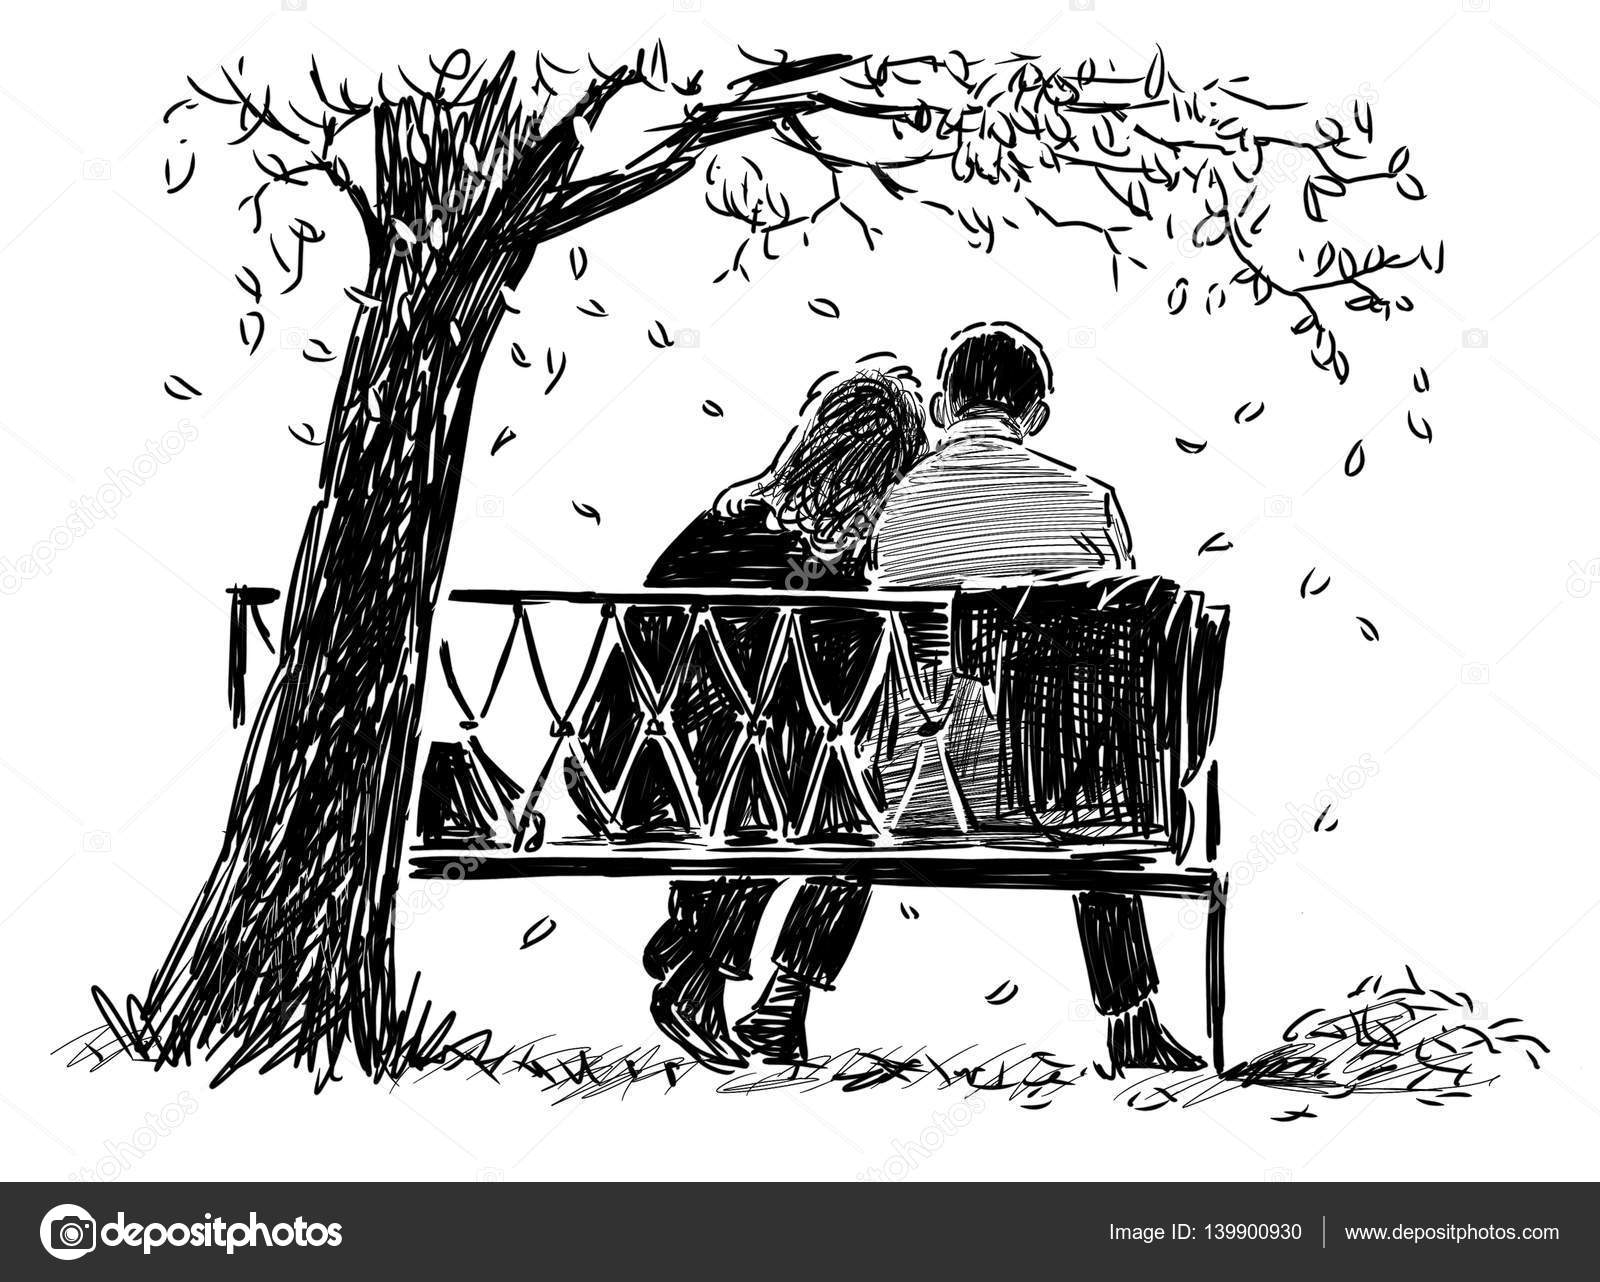 depositphotos 139900930 stock illustration sketch of a loving couple